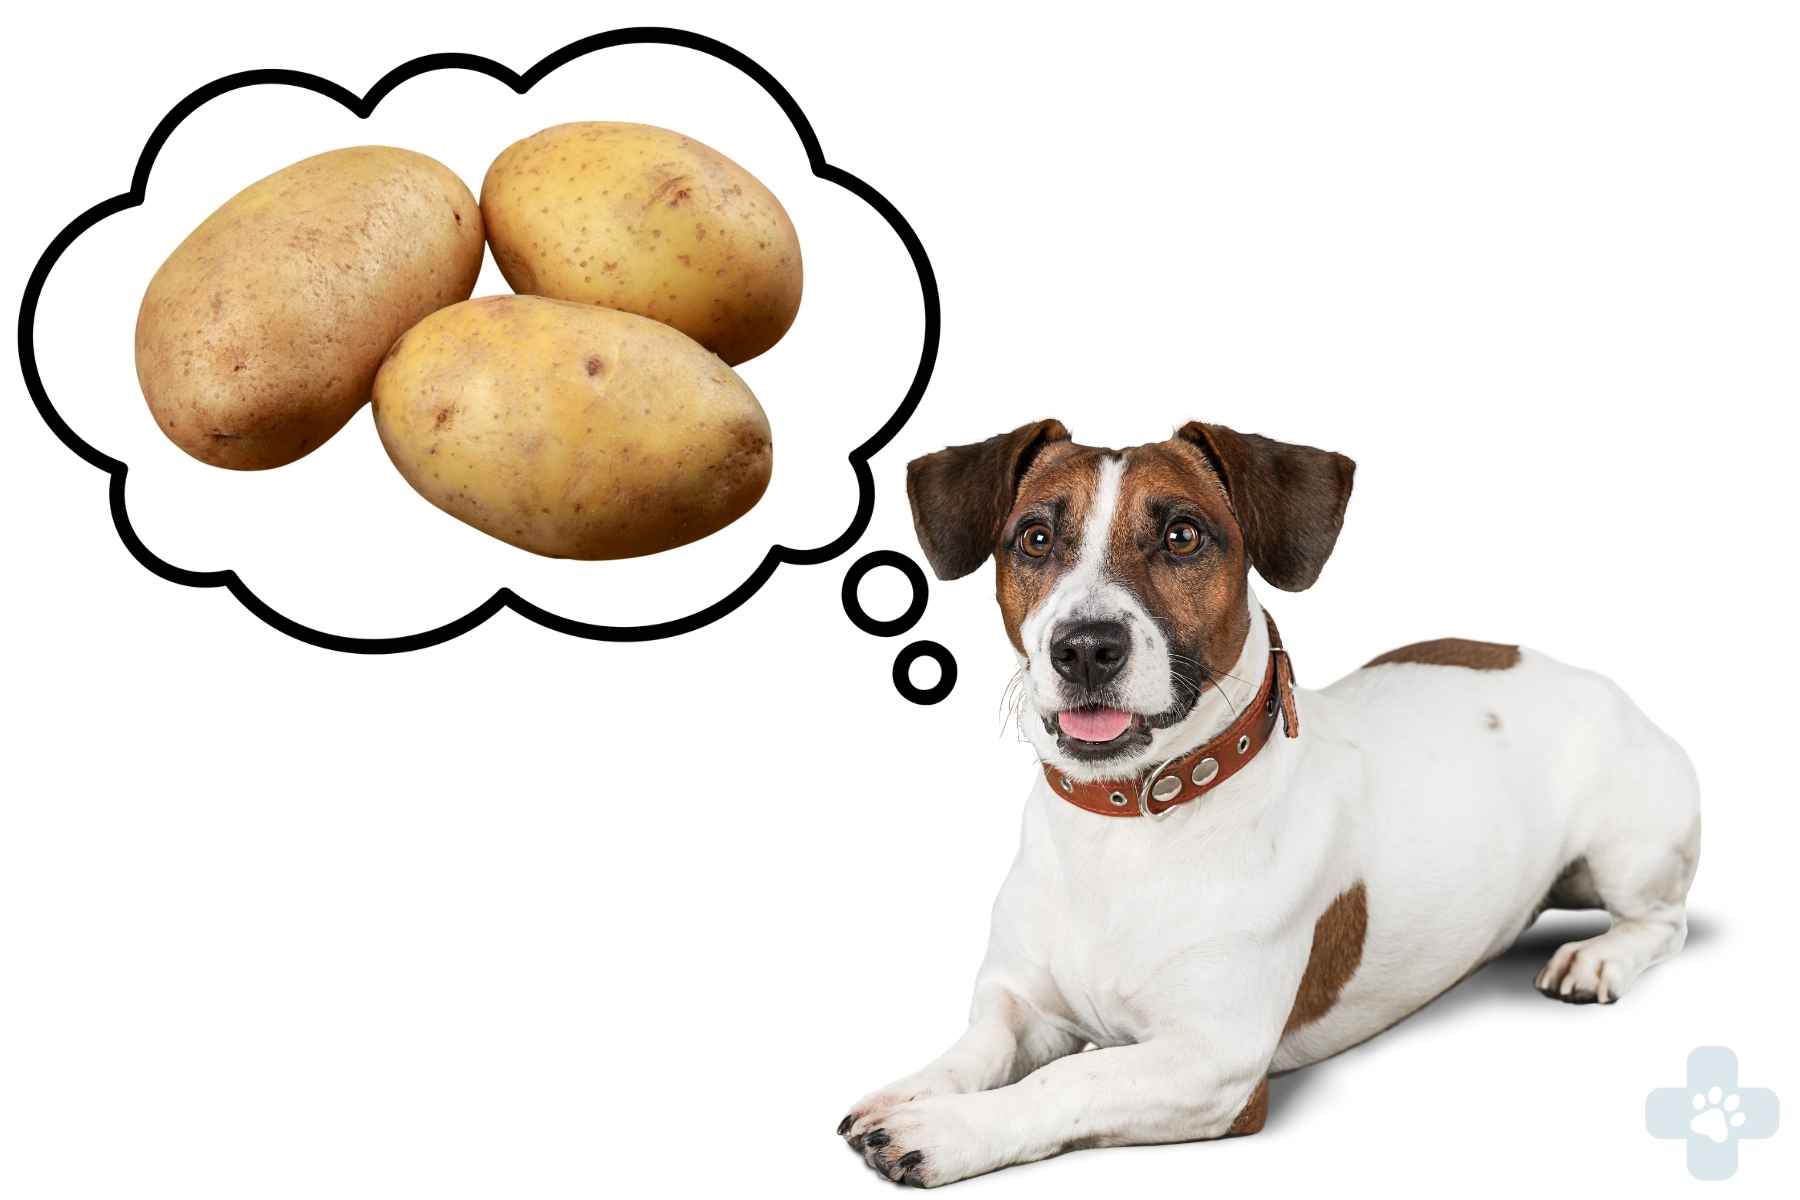 Dog thinking about potatoes